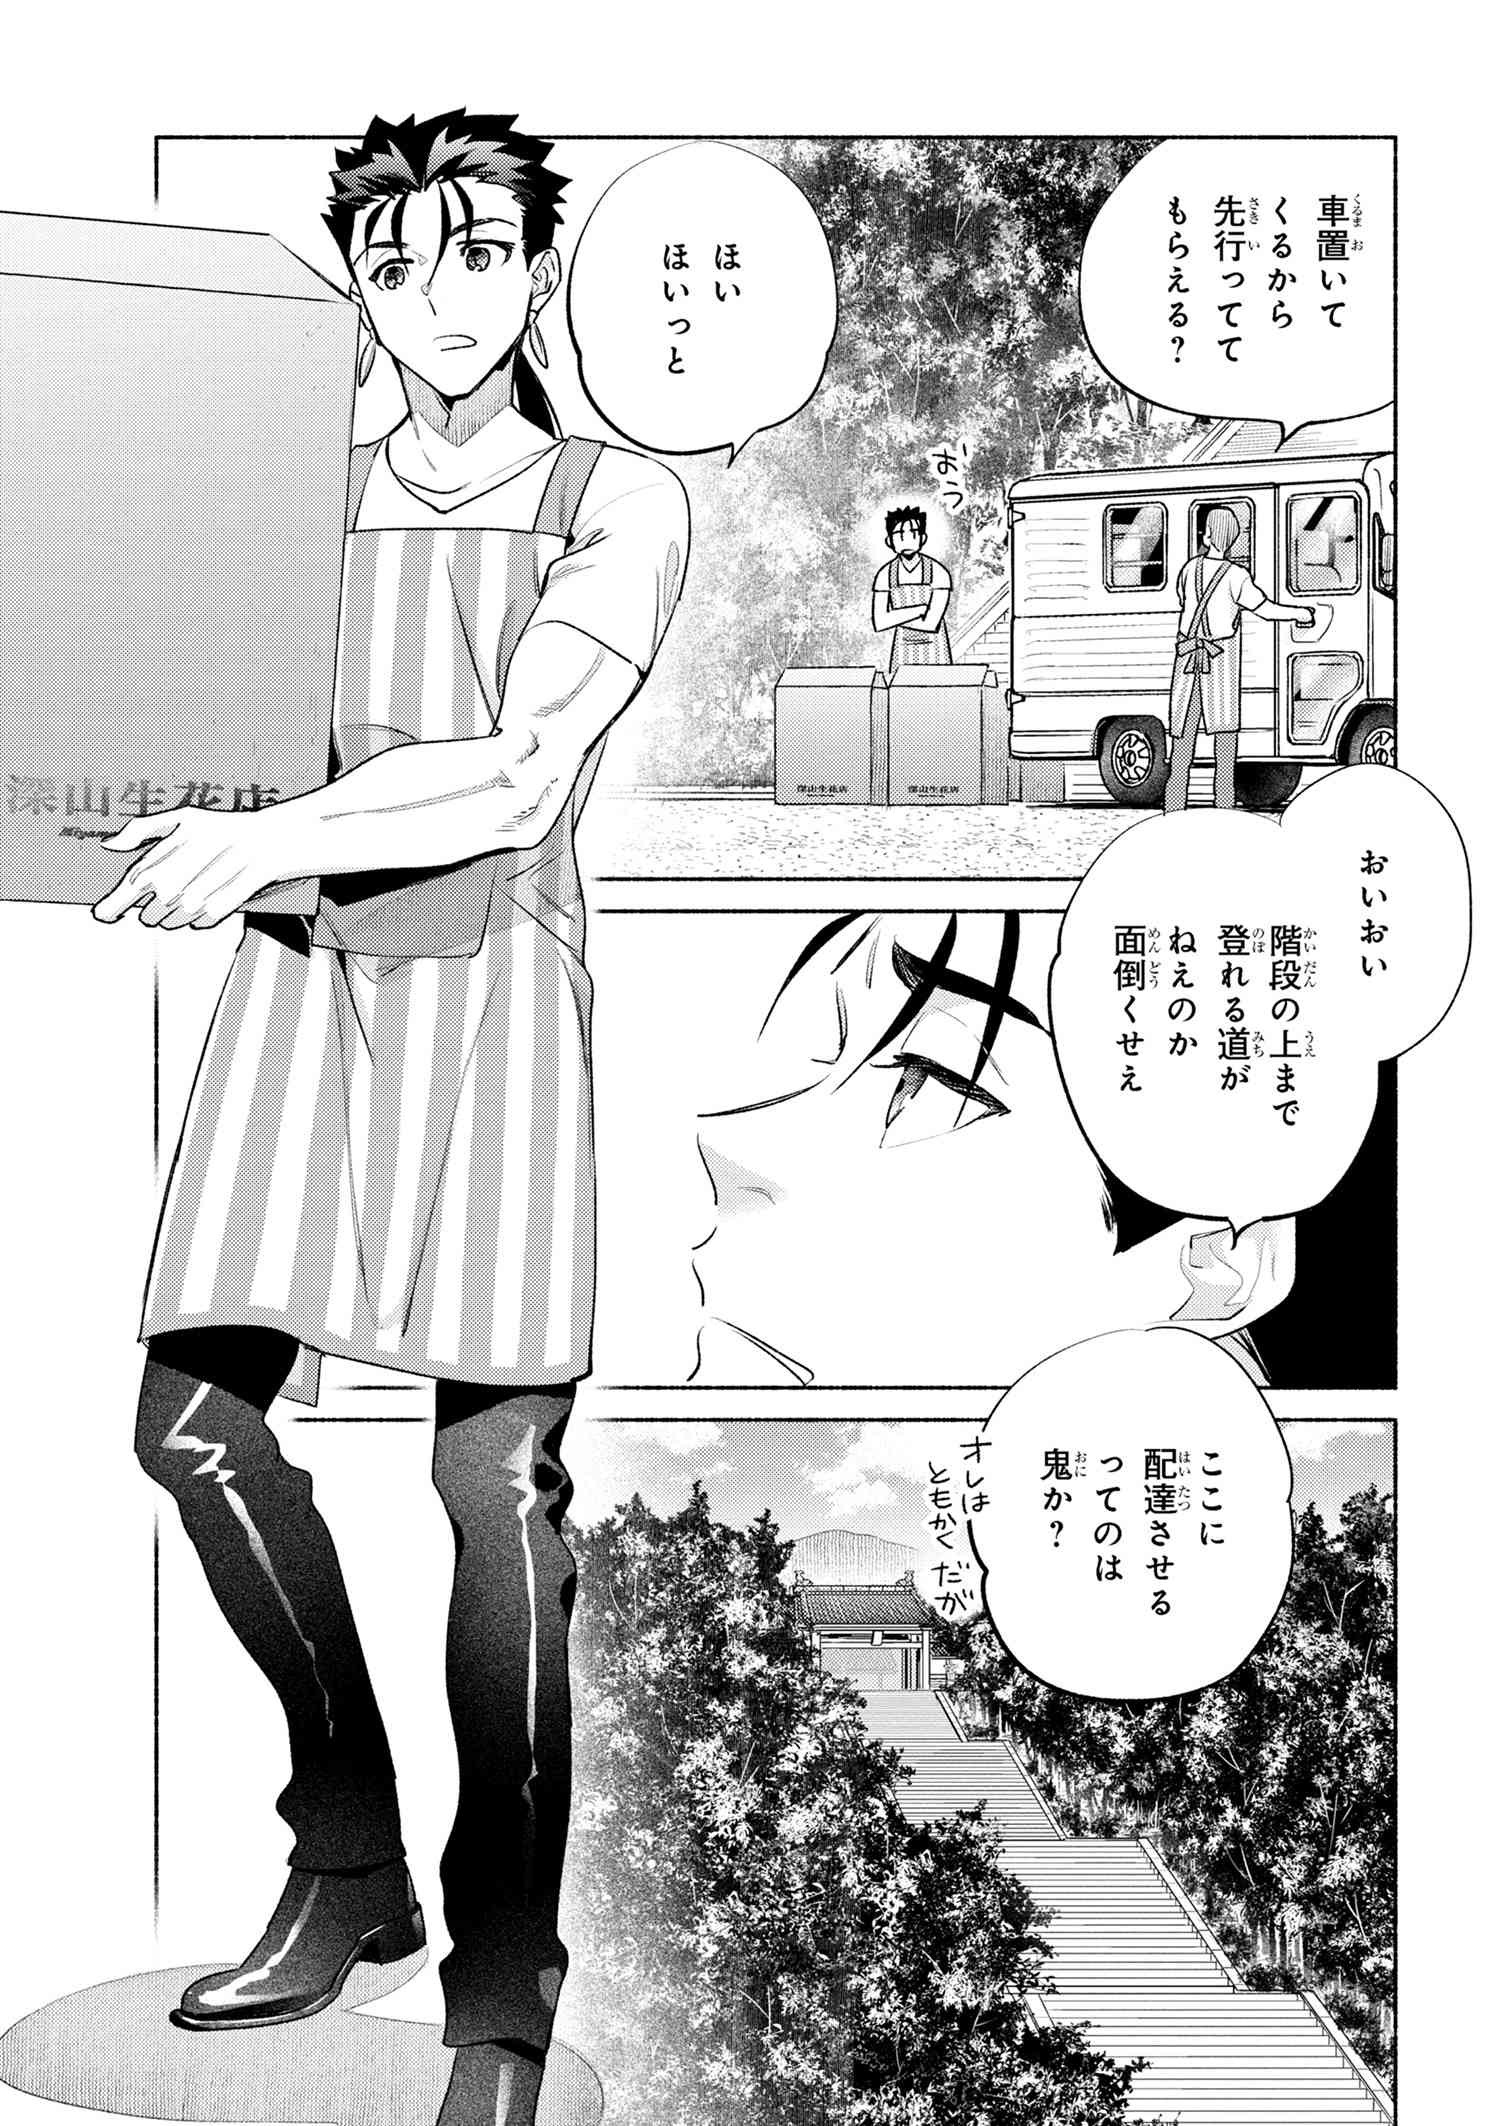 Emiya-san Chi no Kyou no Gohan - Chapter 63 - Page 3